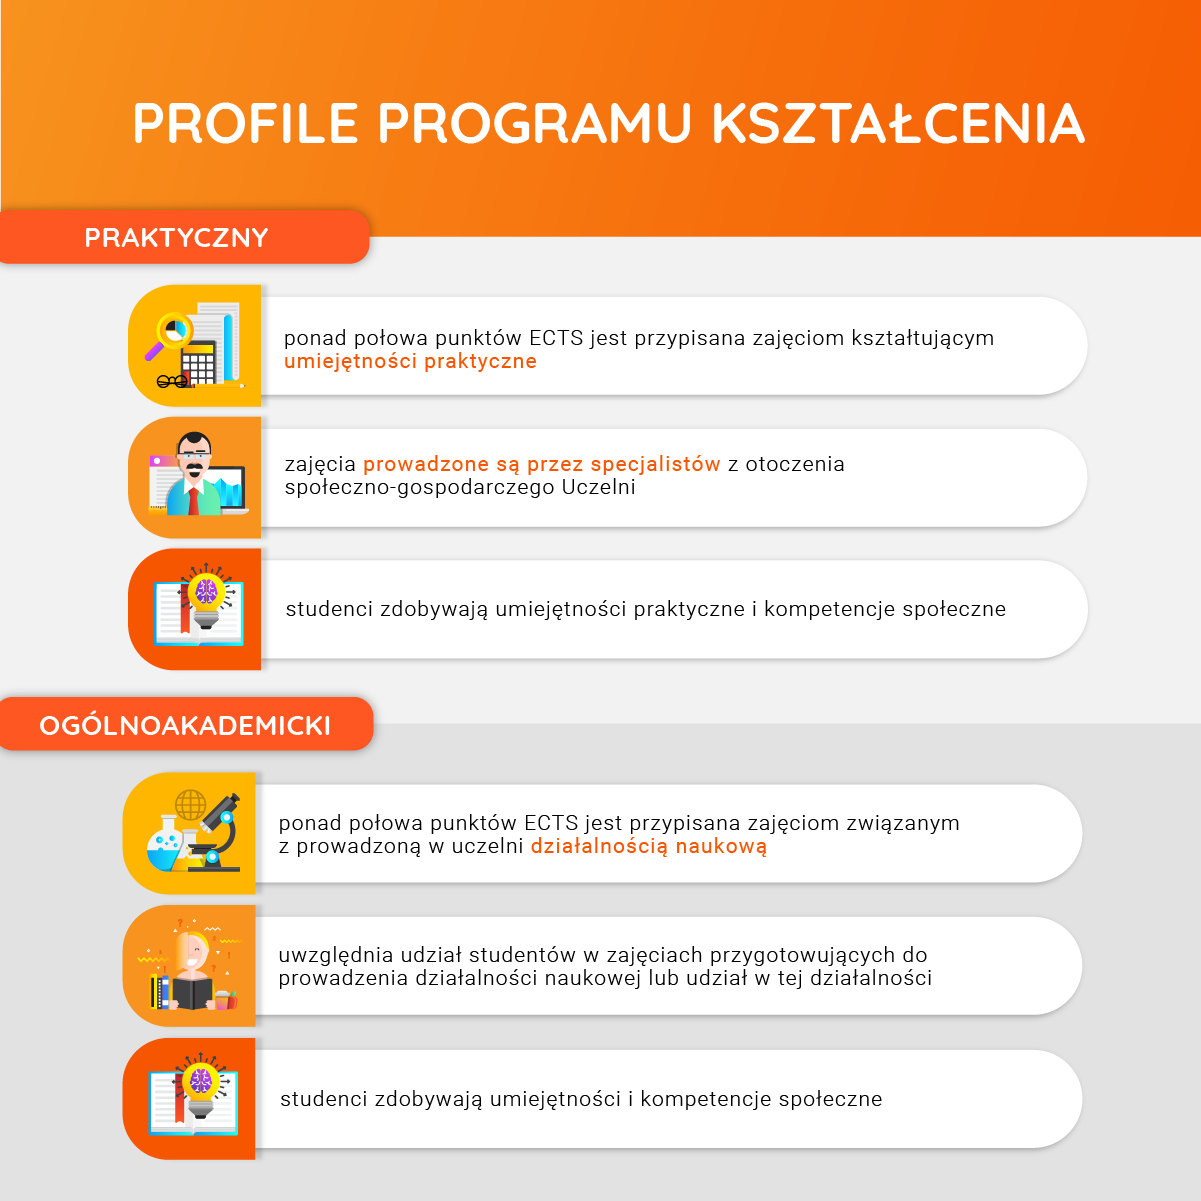 ProfileProgramuKształcenia.png